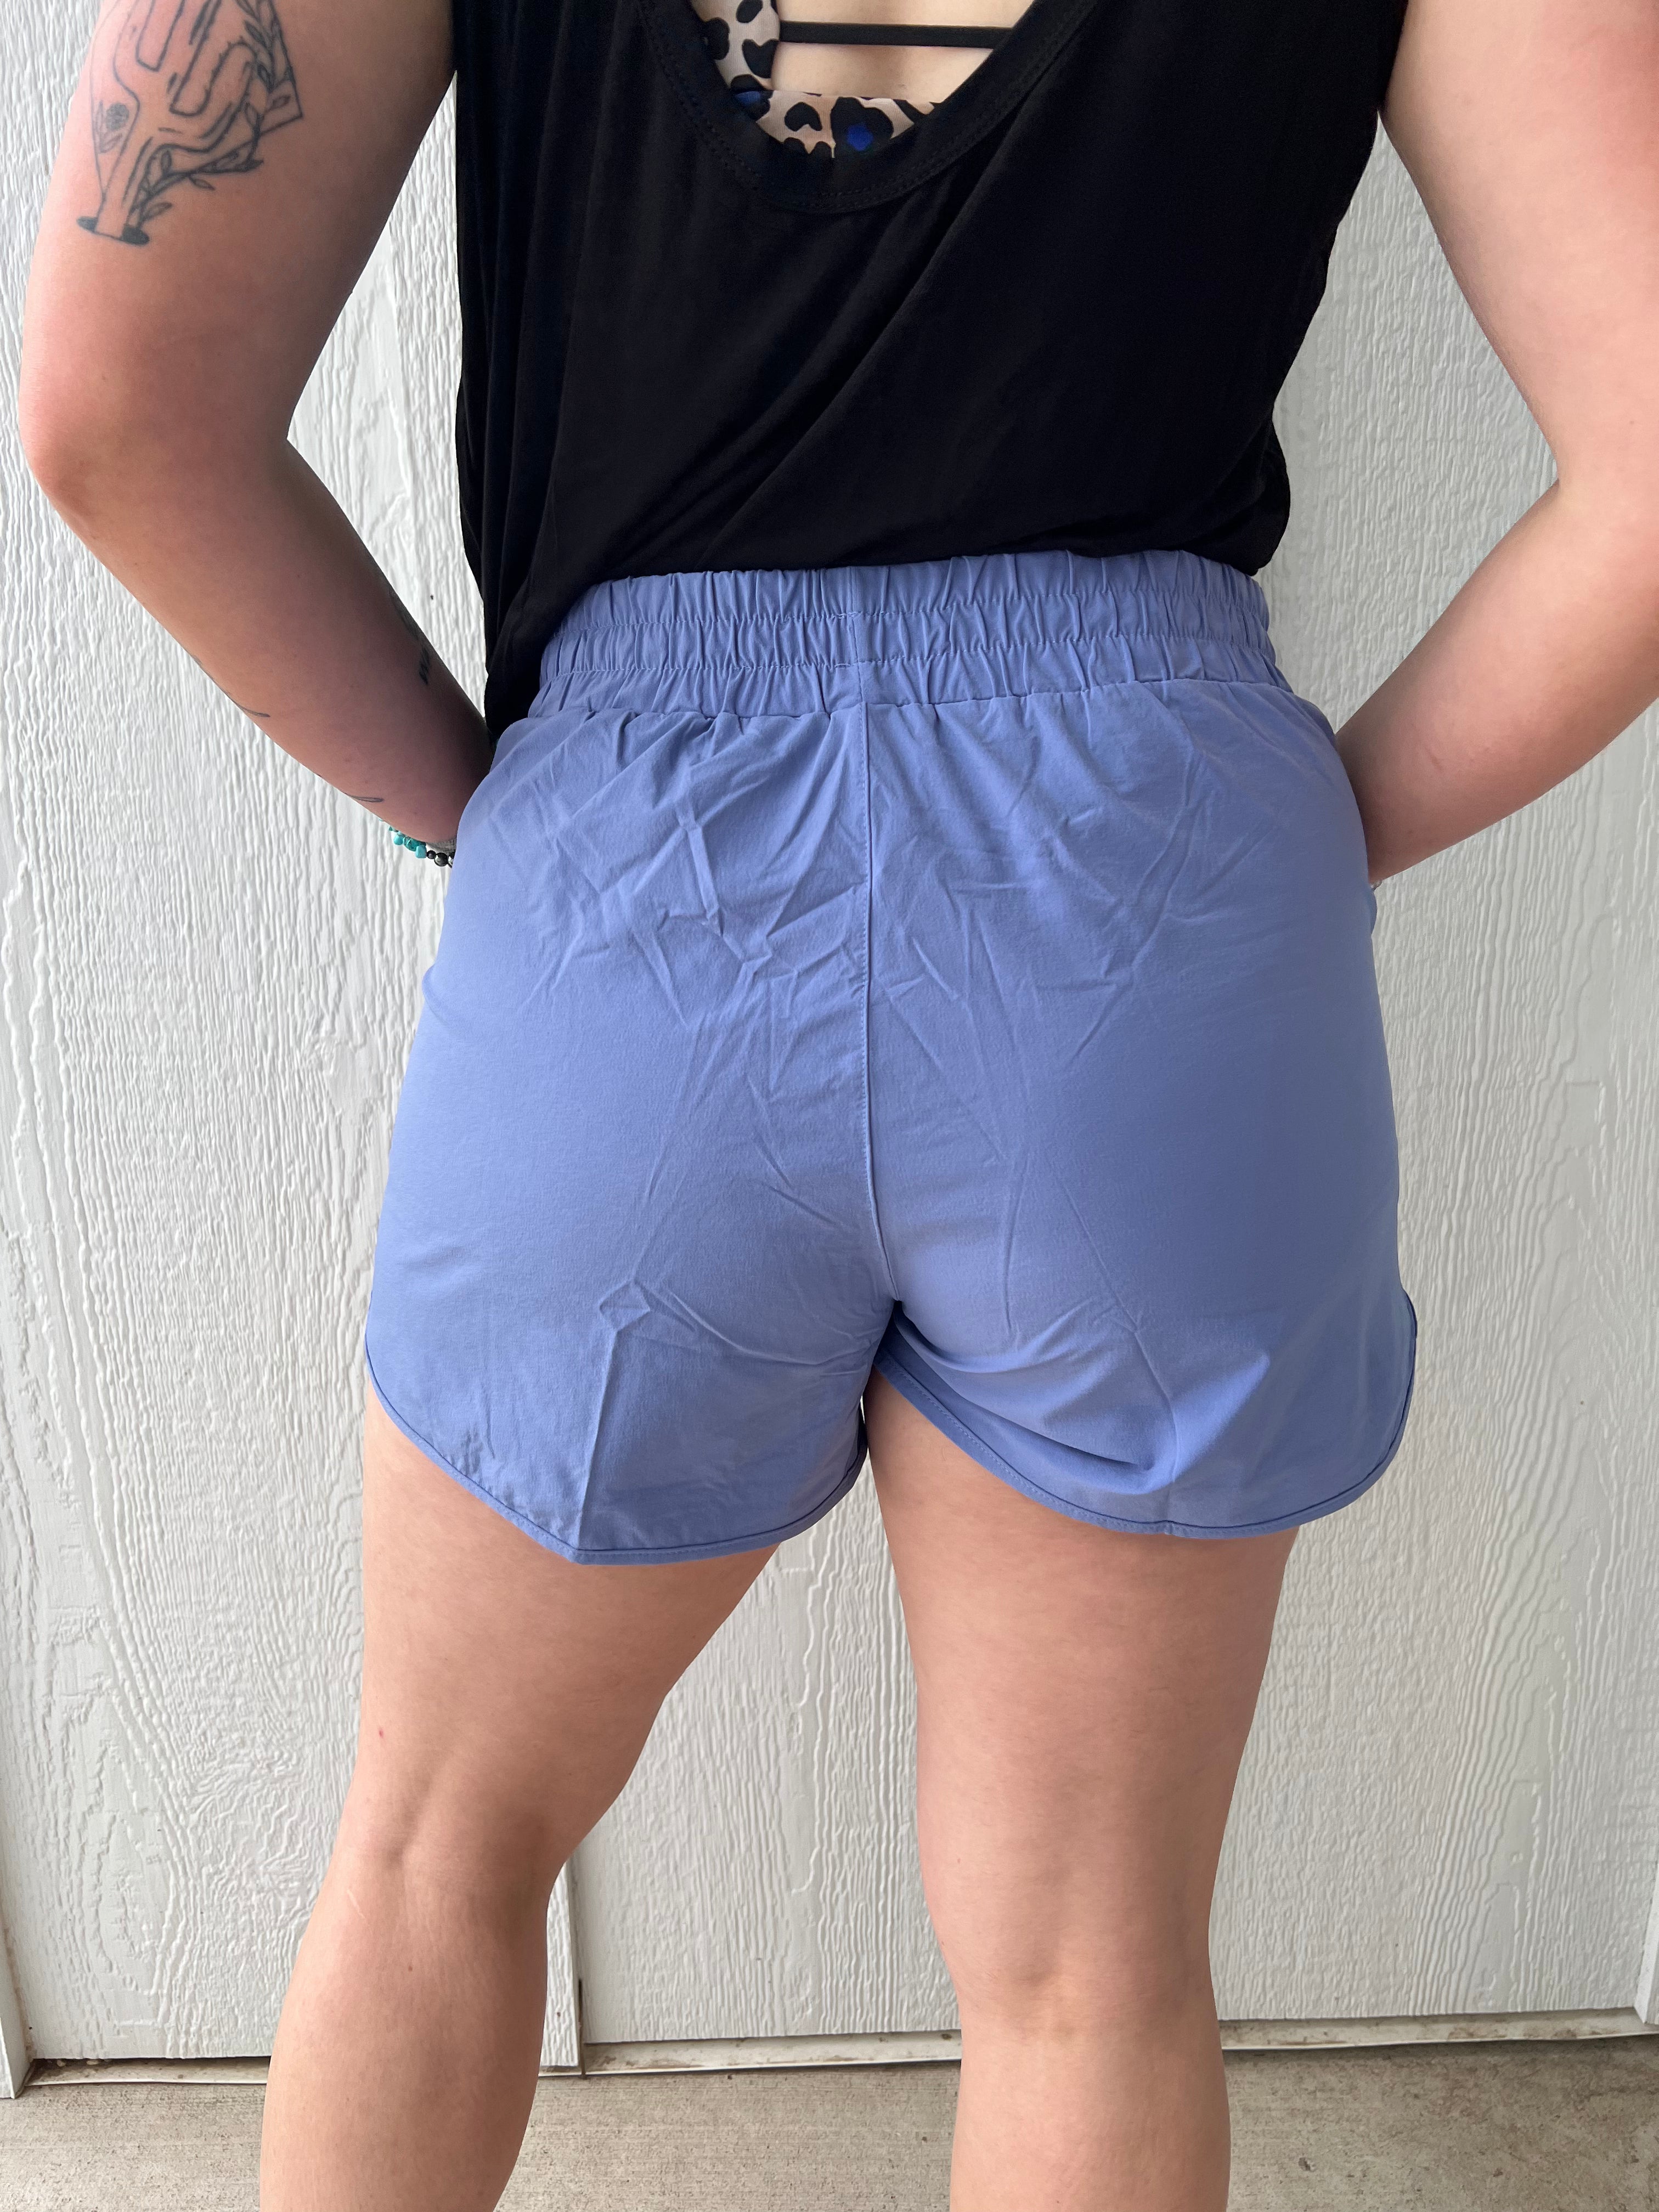 The Sydney Shorts (SMALL-XL)